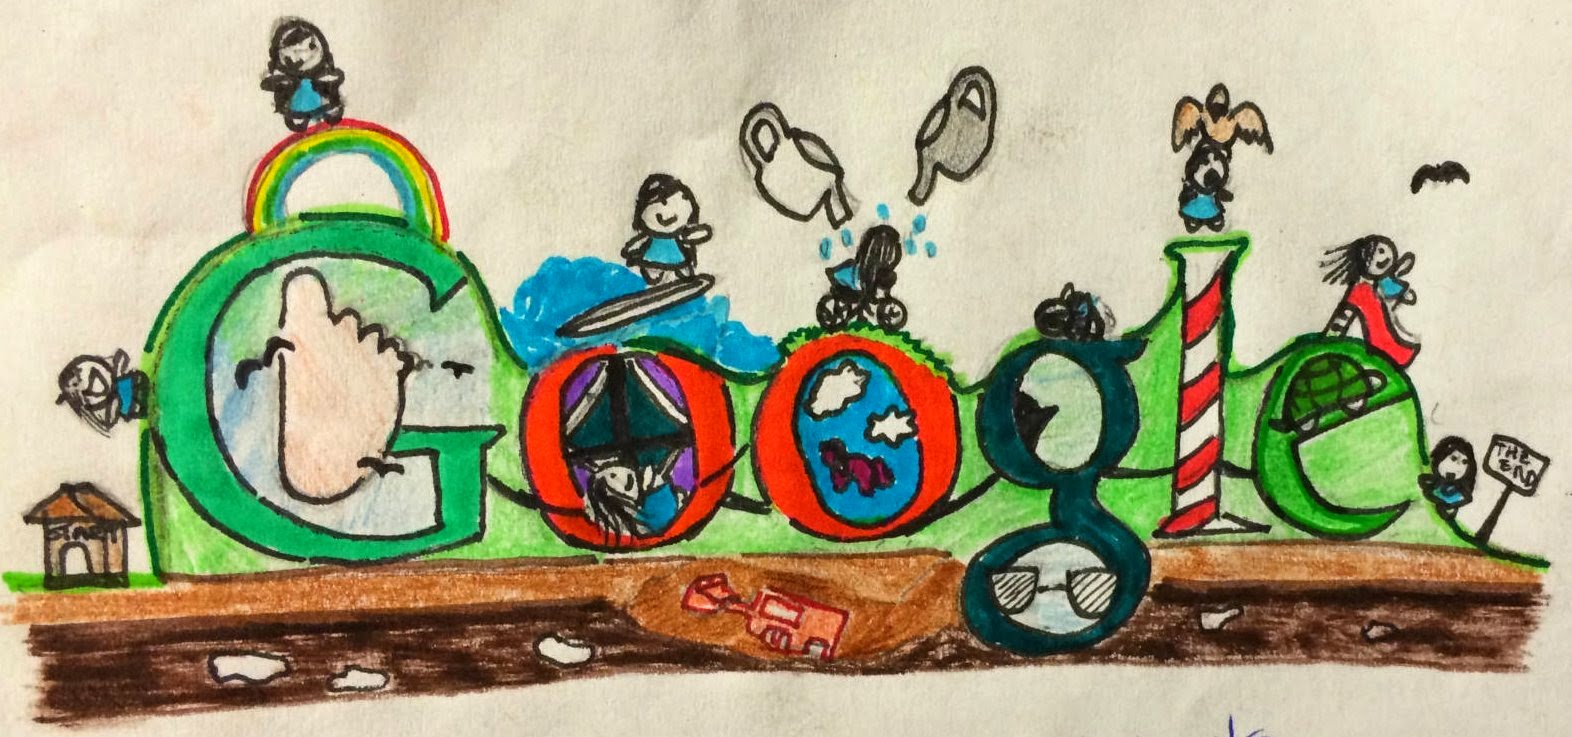 Google New Zealand Blog Doodle 4 Google Voting Starts Today